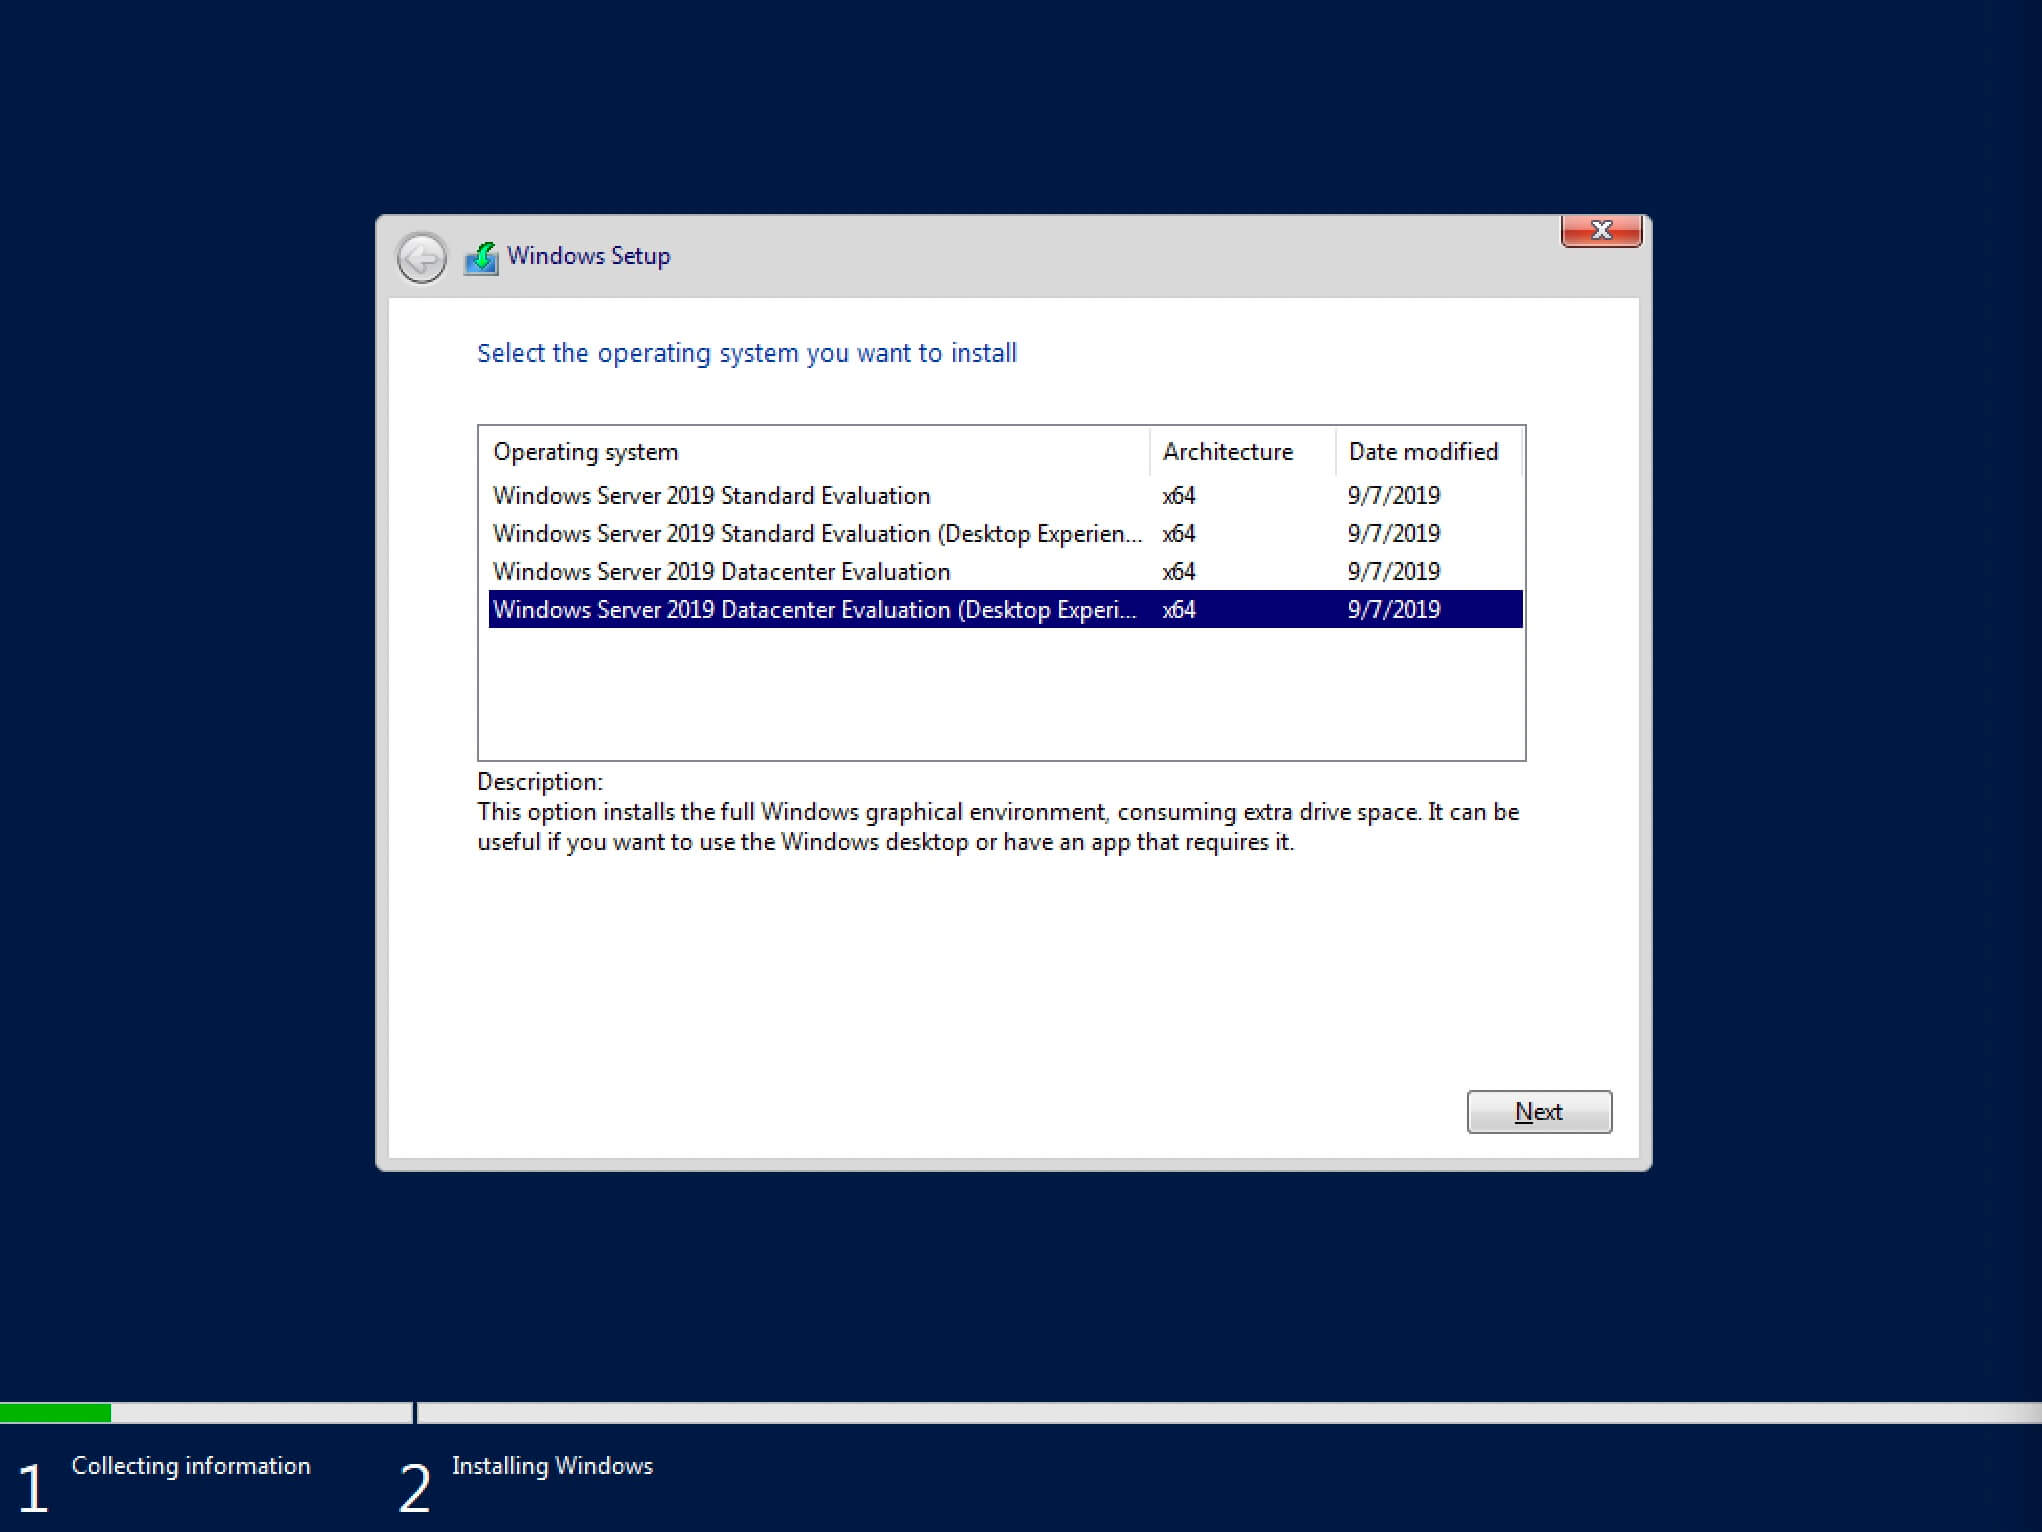 Install Windows Server 2019